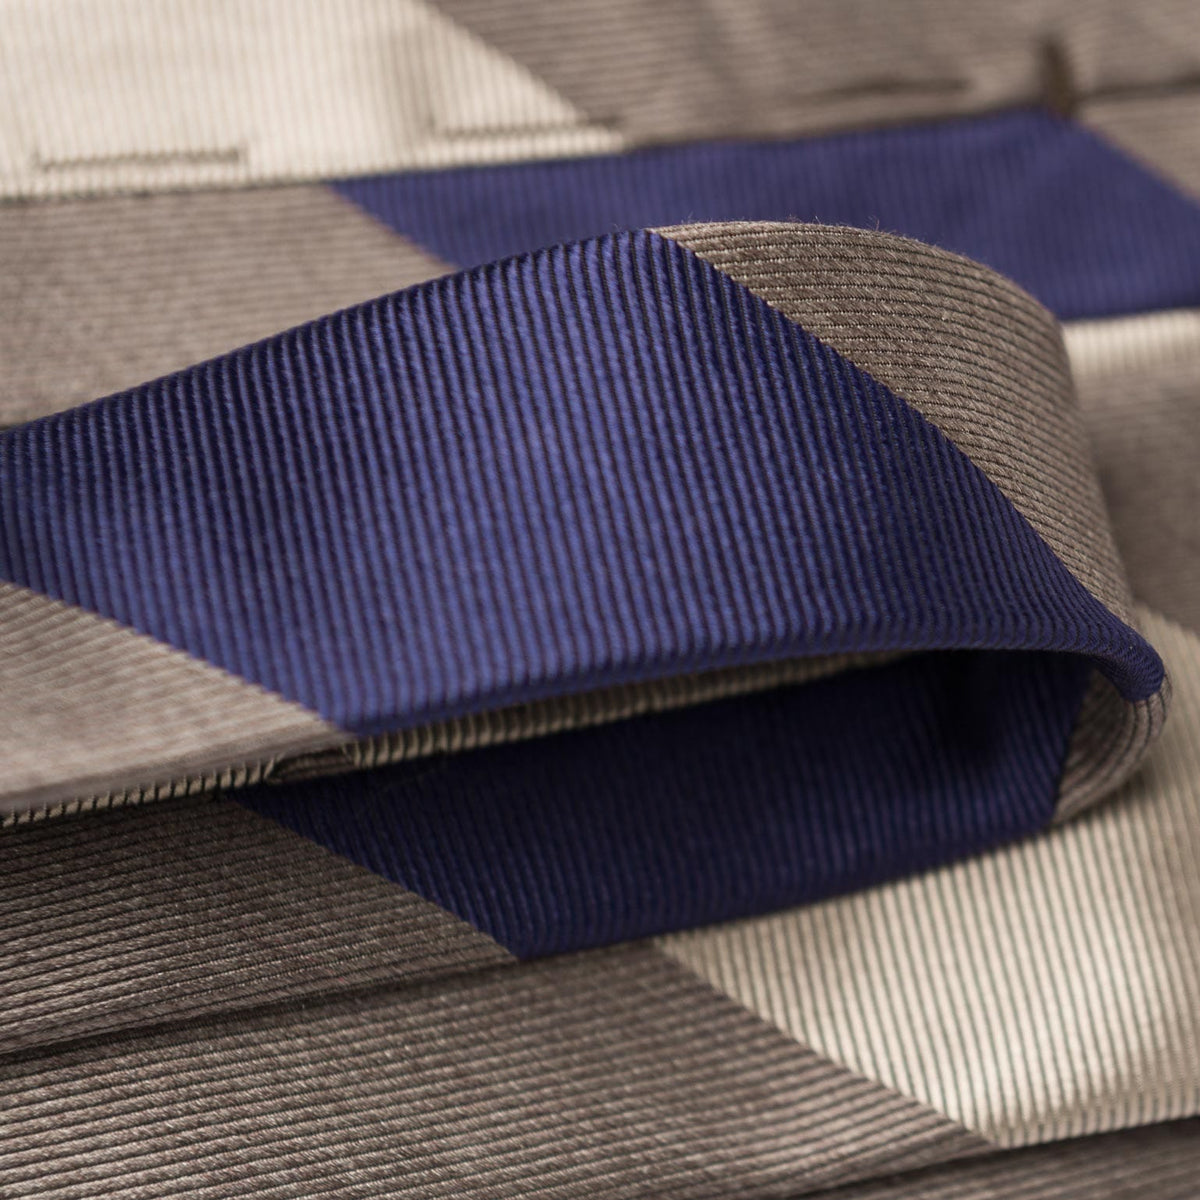 Italian Silk Tie - Taupe Grey Stripes